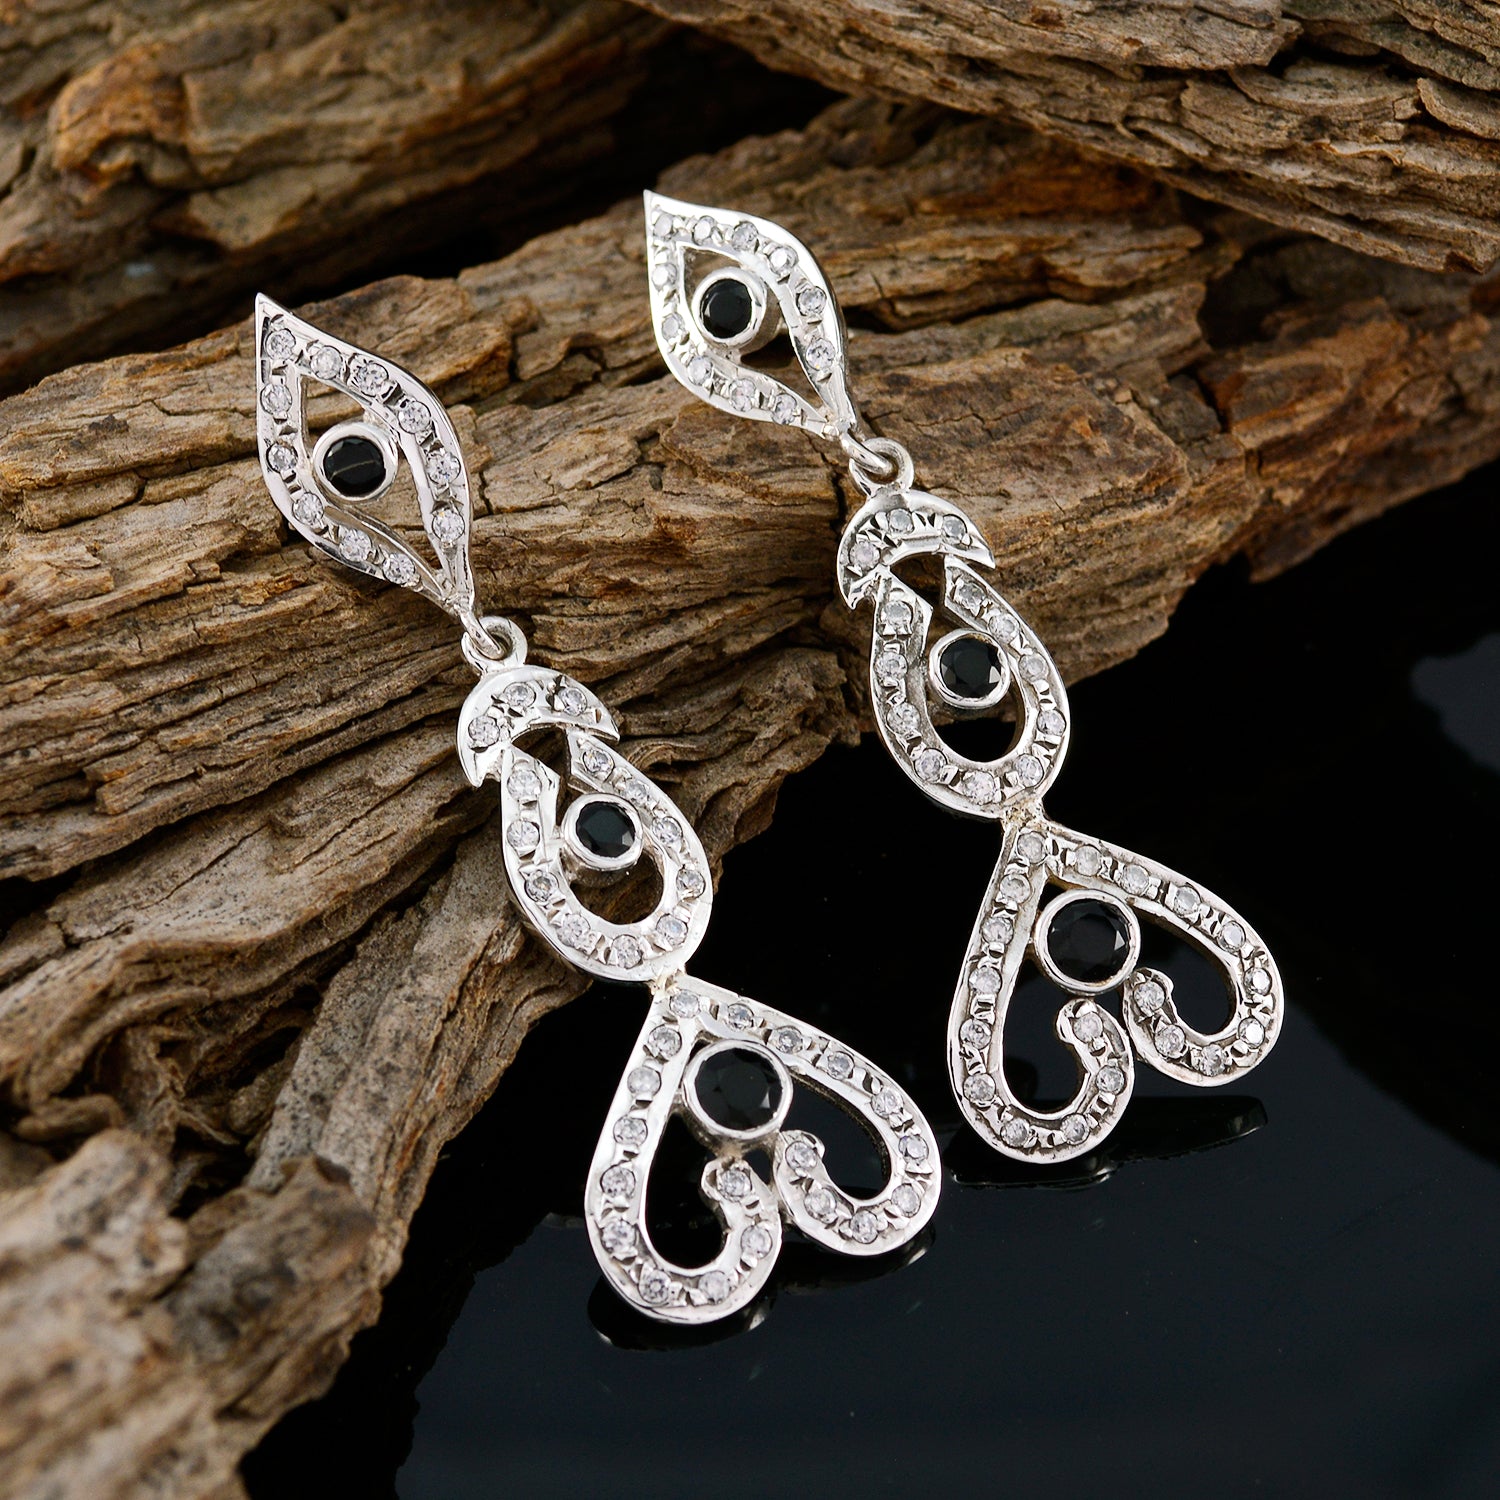 Riyo Nice Gemstone round Faceted Black Onyx Silver Earrings st. patricks day gift